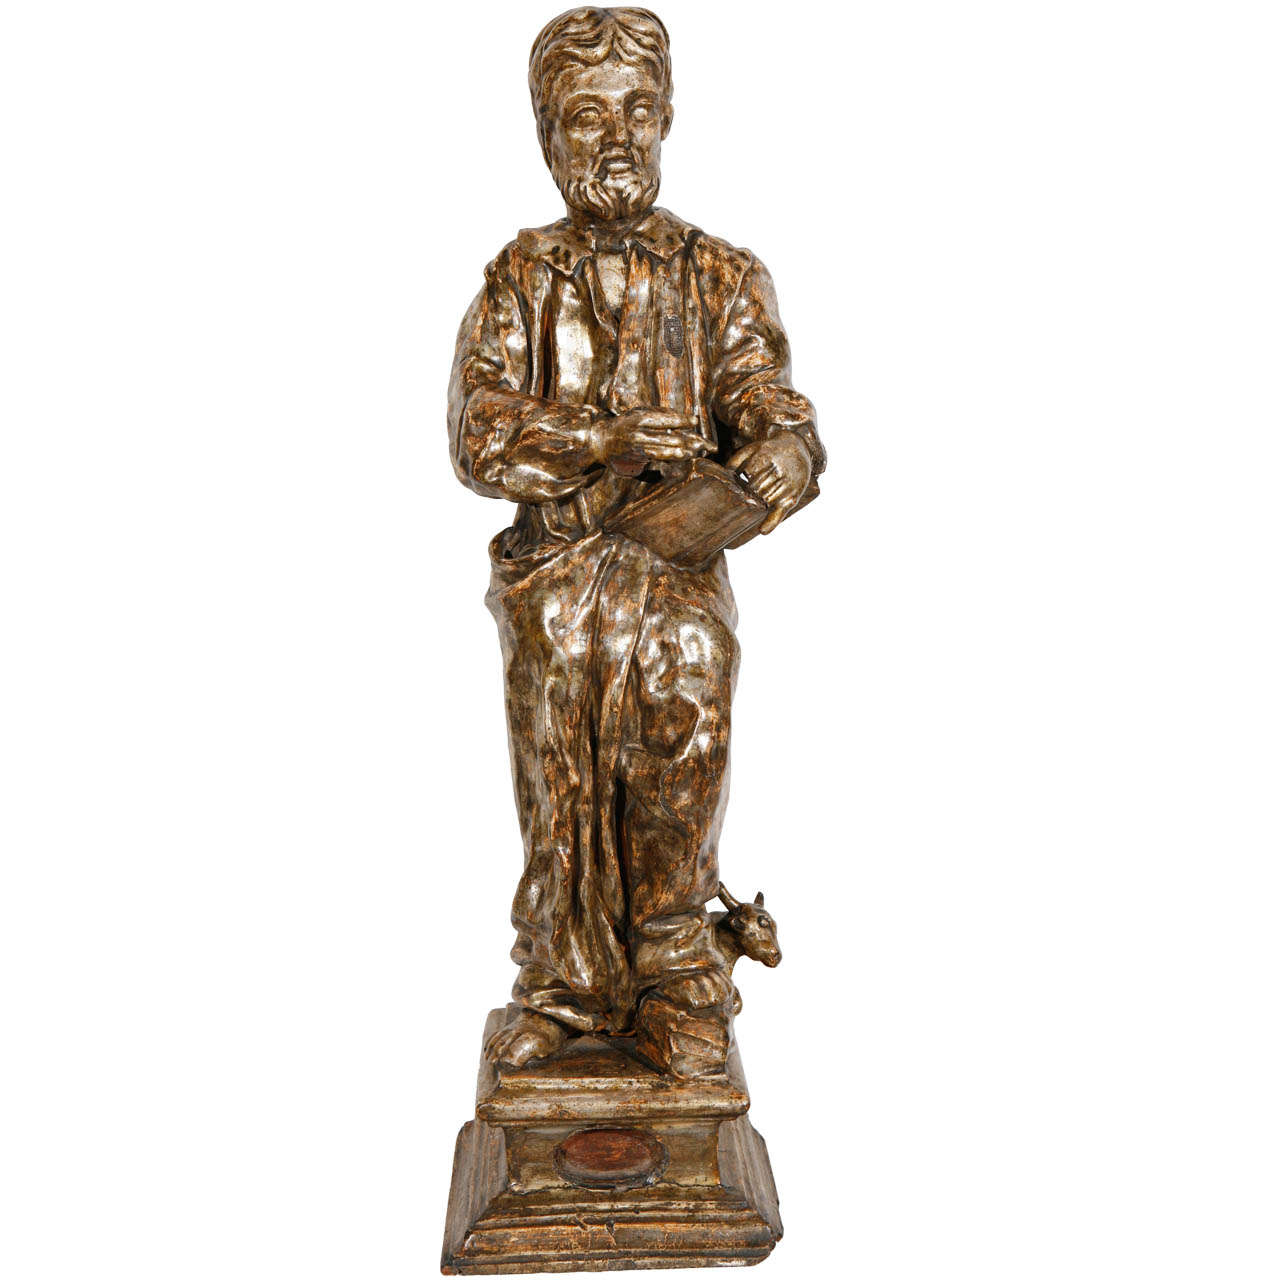 18th Century Italian Scholar Statue For Sale at 1stdibs
